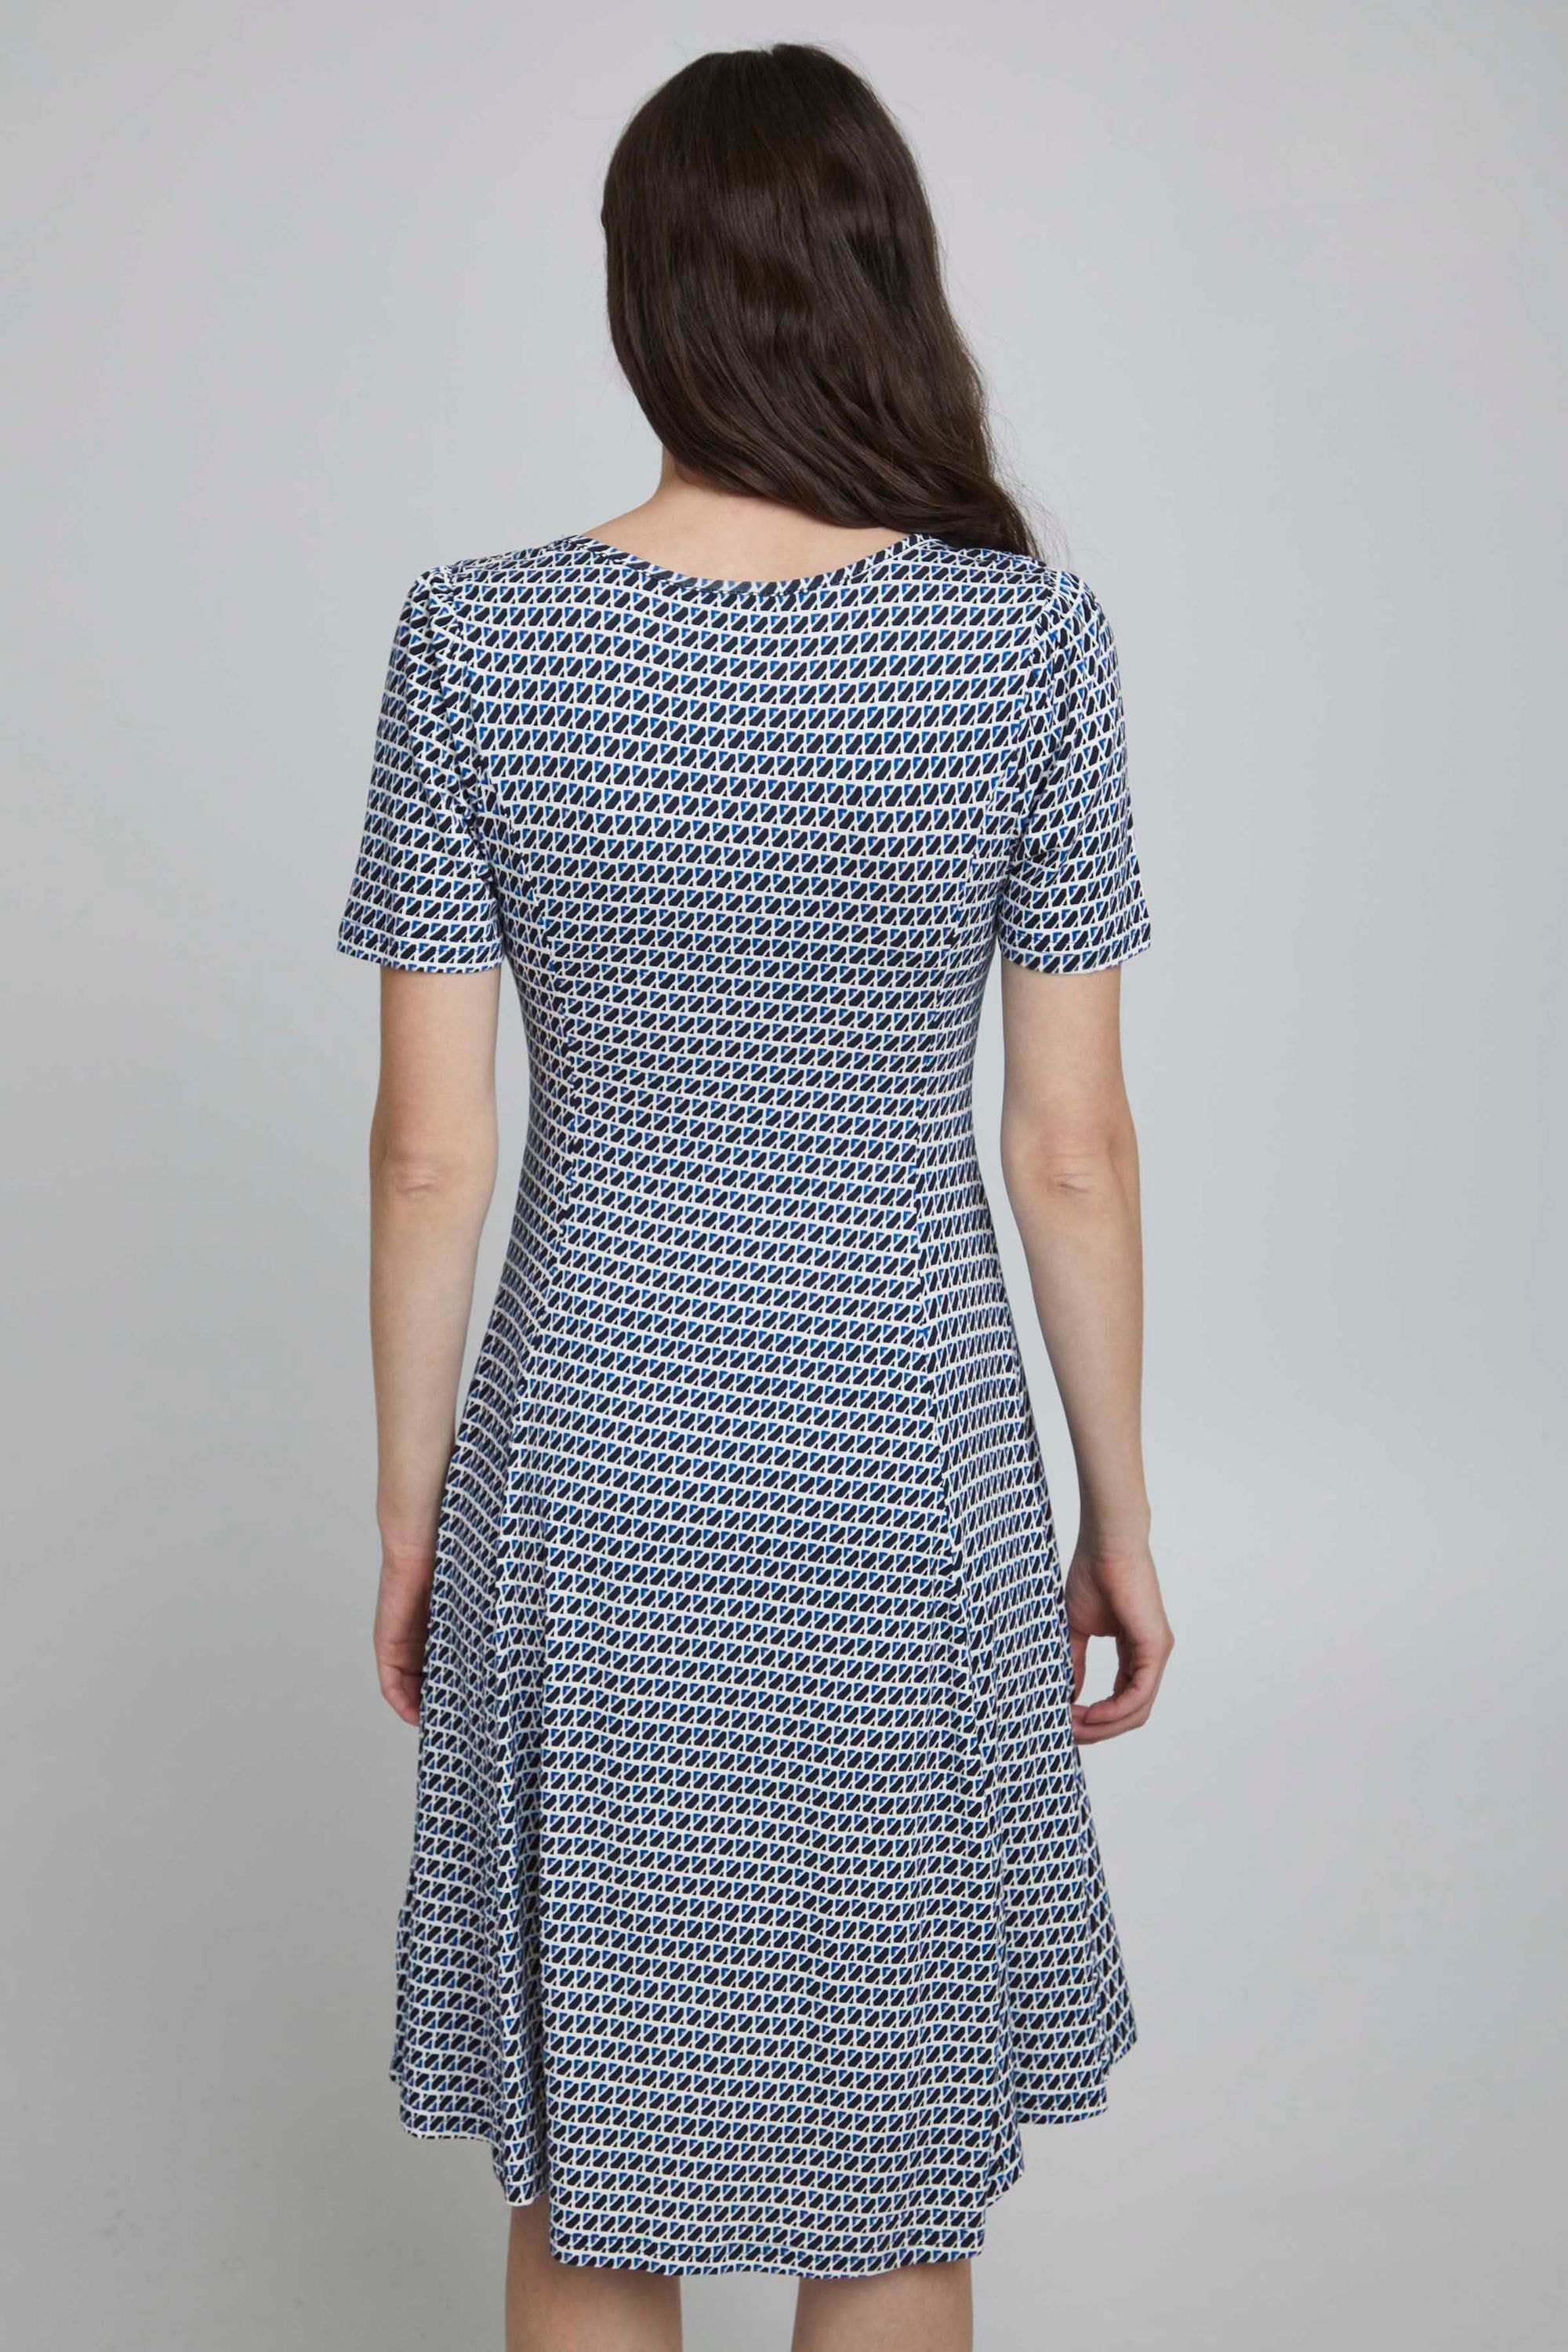 »Fransa walking online | kaufen FRFEDOT Dress« Jerseykleid 1 I\'m fransa